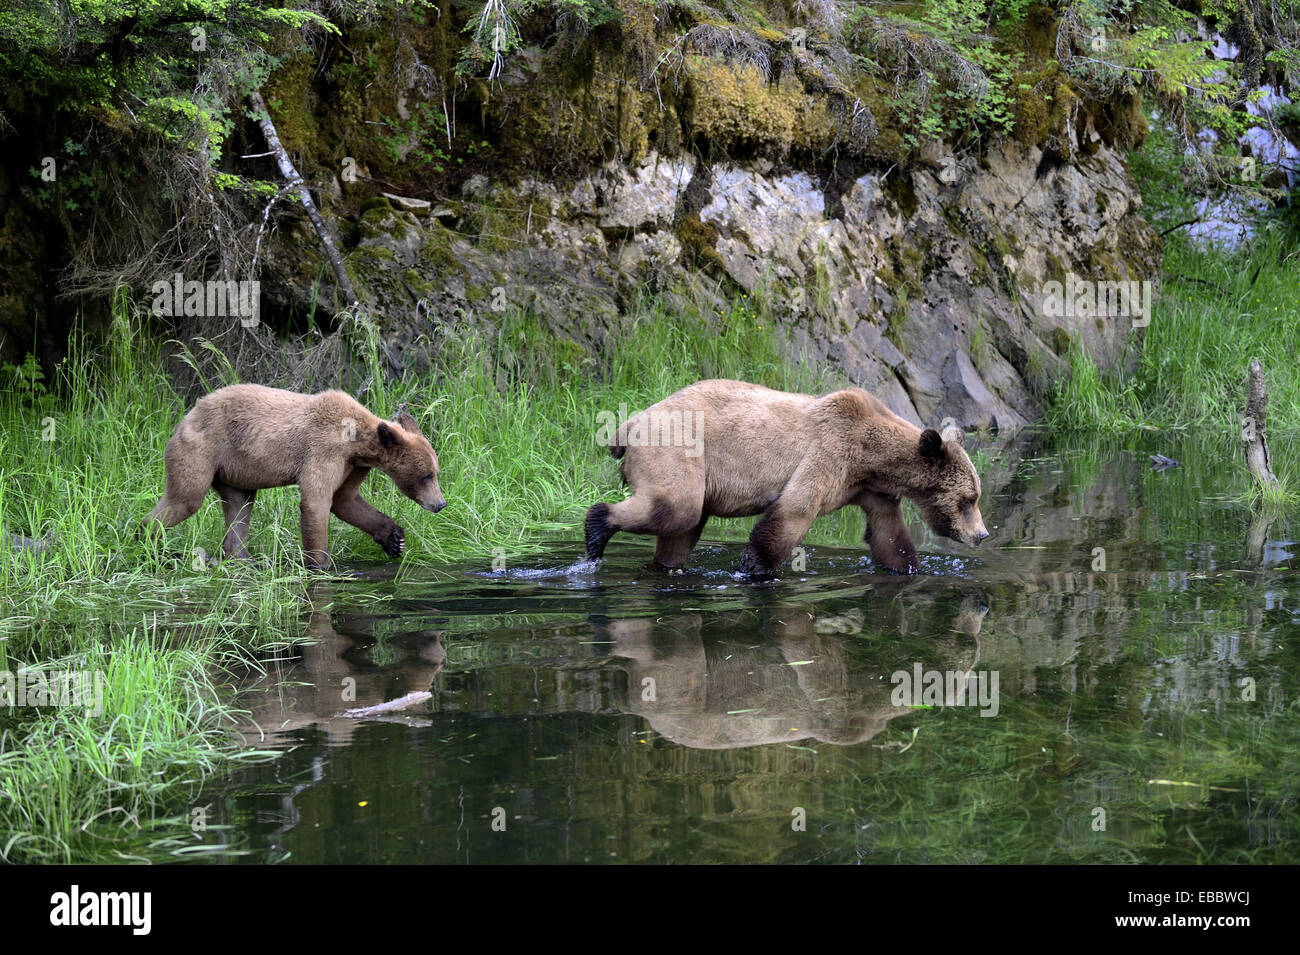 Hembra de oso grizzly (Ursus arctos horribilis) cruzando el agua, seguidos por su cachorro, Khutzeymateen Grizzly Bear Sanctuary, Foto de stock